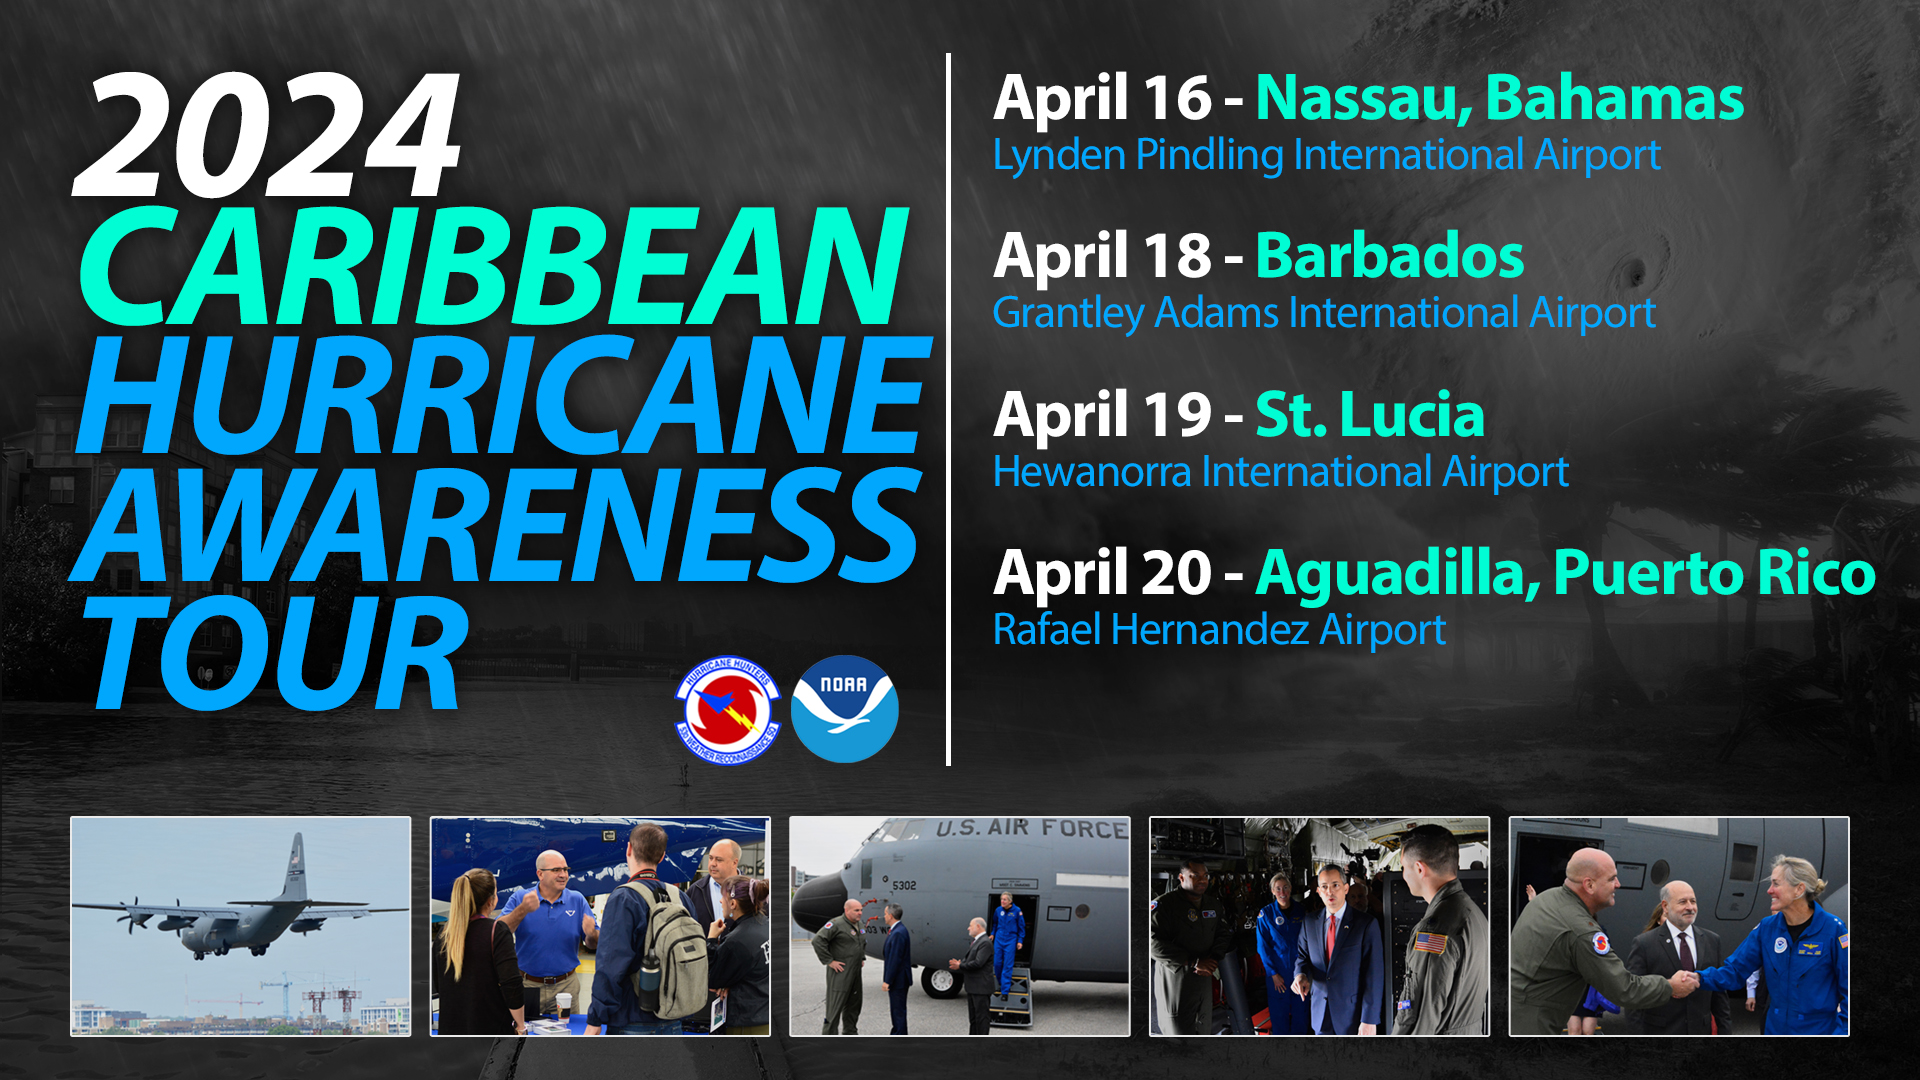 Image showing 2024 Caribbean Hurricane Awareness Tour information - April 16 – Nassau, Bahamas, April 18 – Barbados, April 19 – St.Lucia, April 20 – Aguadilla, Puerto Rico.